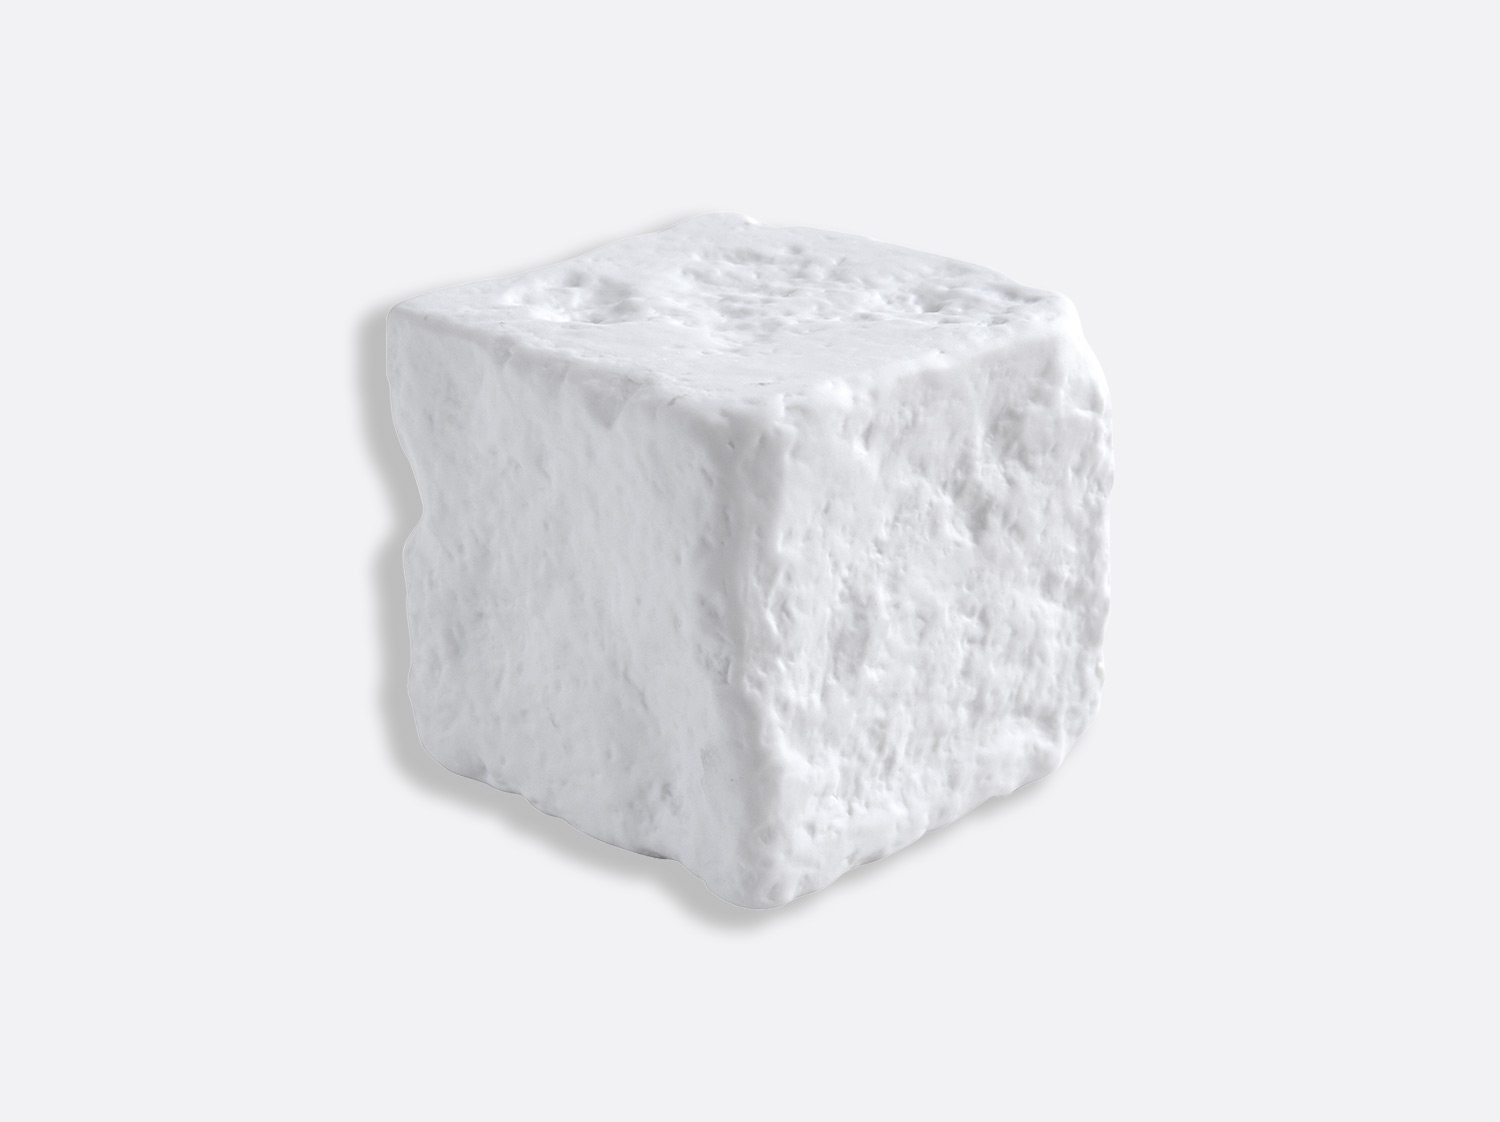 China White paving-stone of the collection Dans le pavé la plage - Bachelot & Caron | Bernardaud